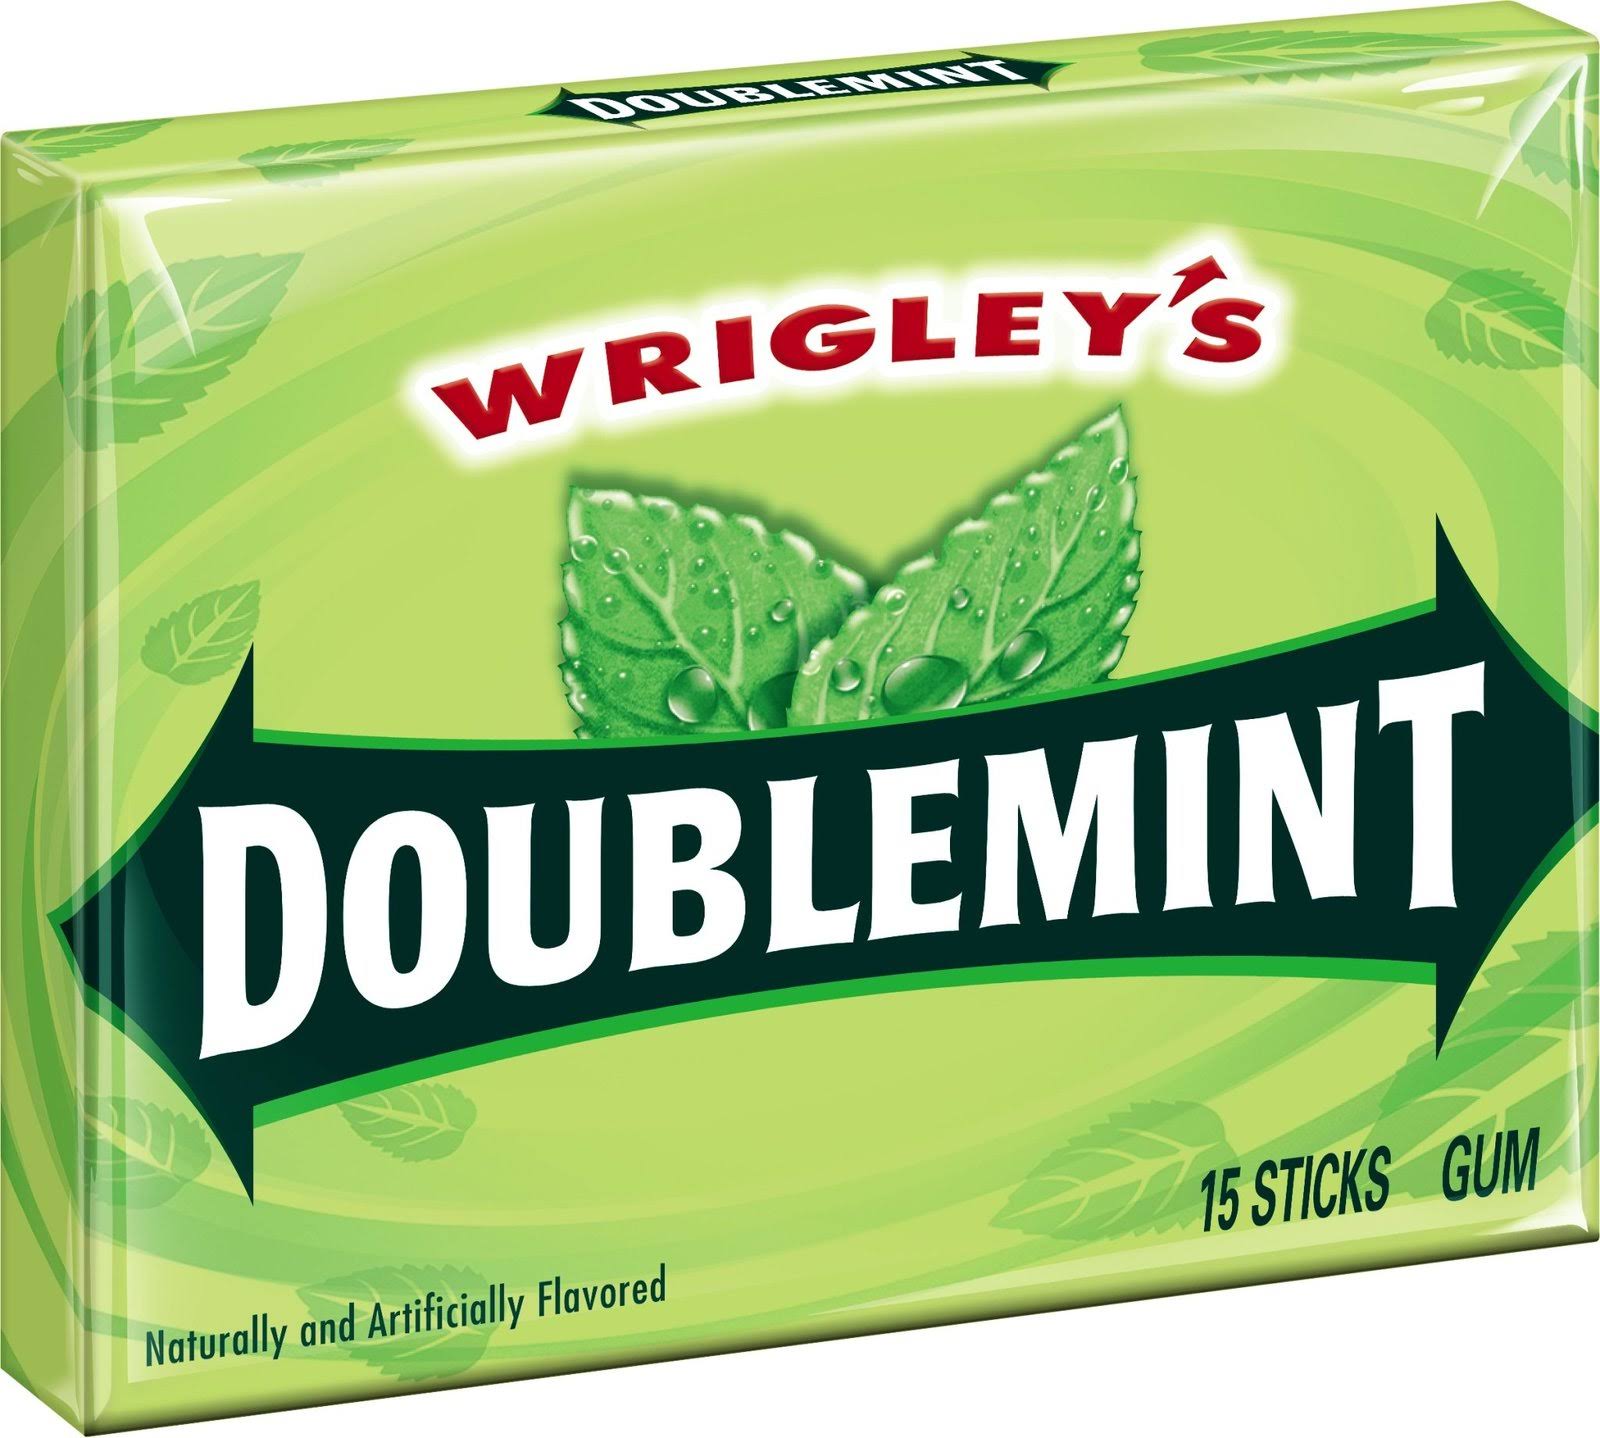 Wrigley's Doublemint Gum - Slim Pack, 15 Sticks